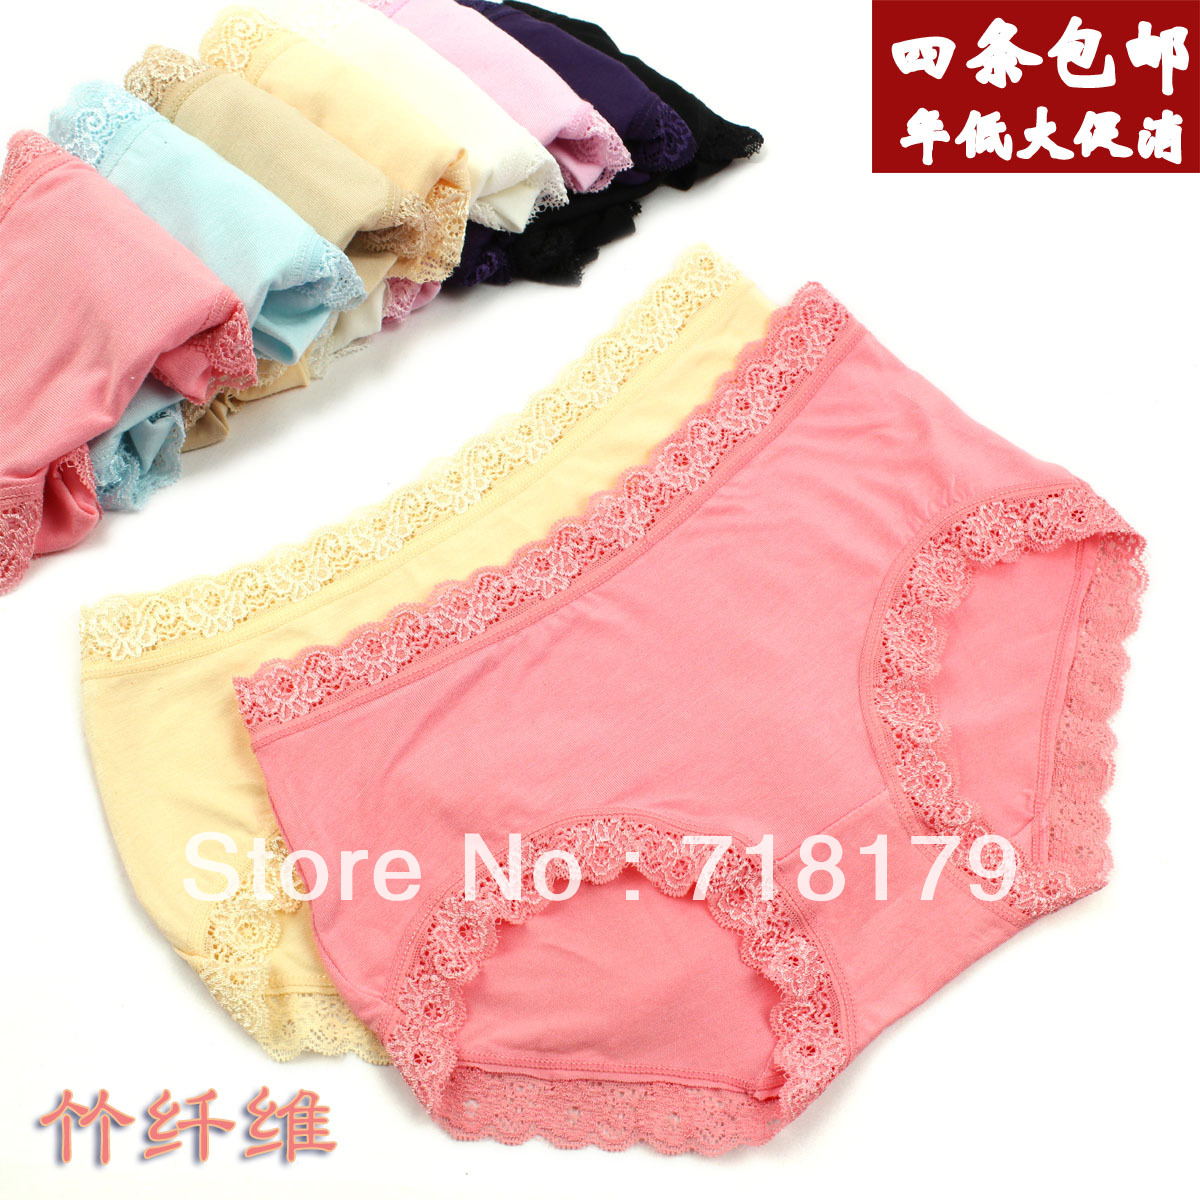 2013 free shipping female bamboo fibre panties mid waist briefs sexy lace panties female panties 100% cotton women's underwear